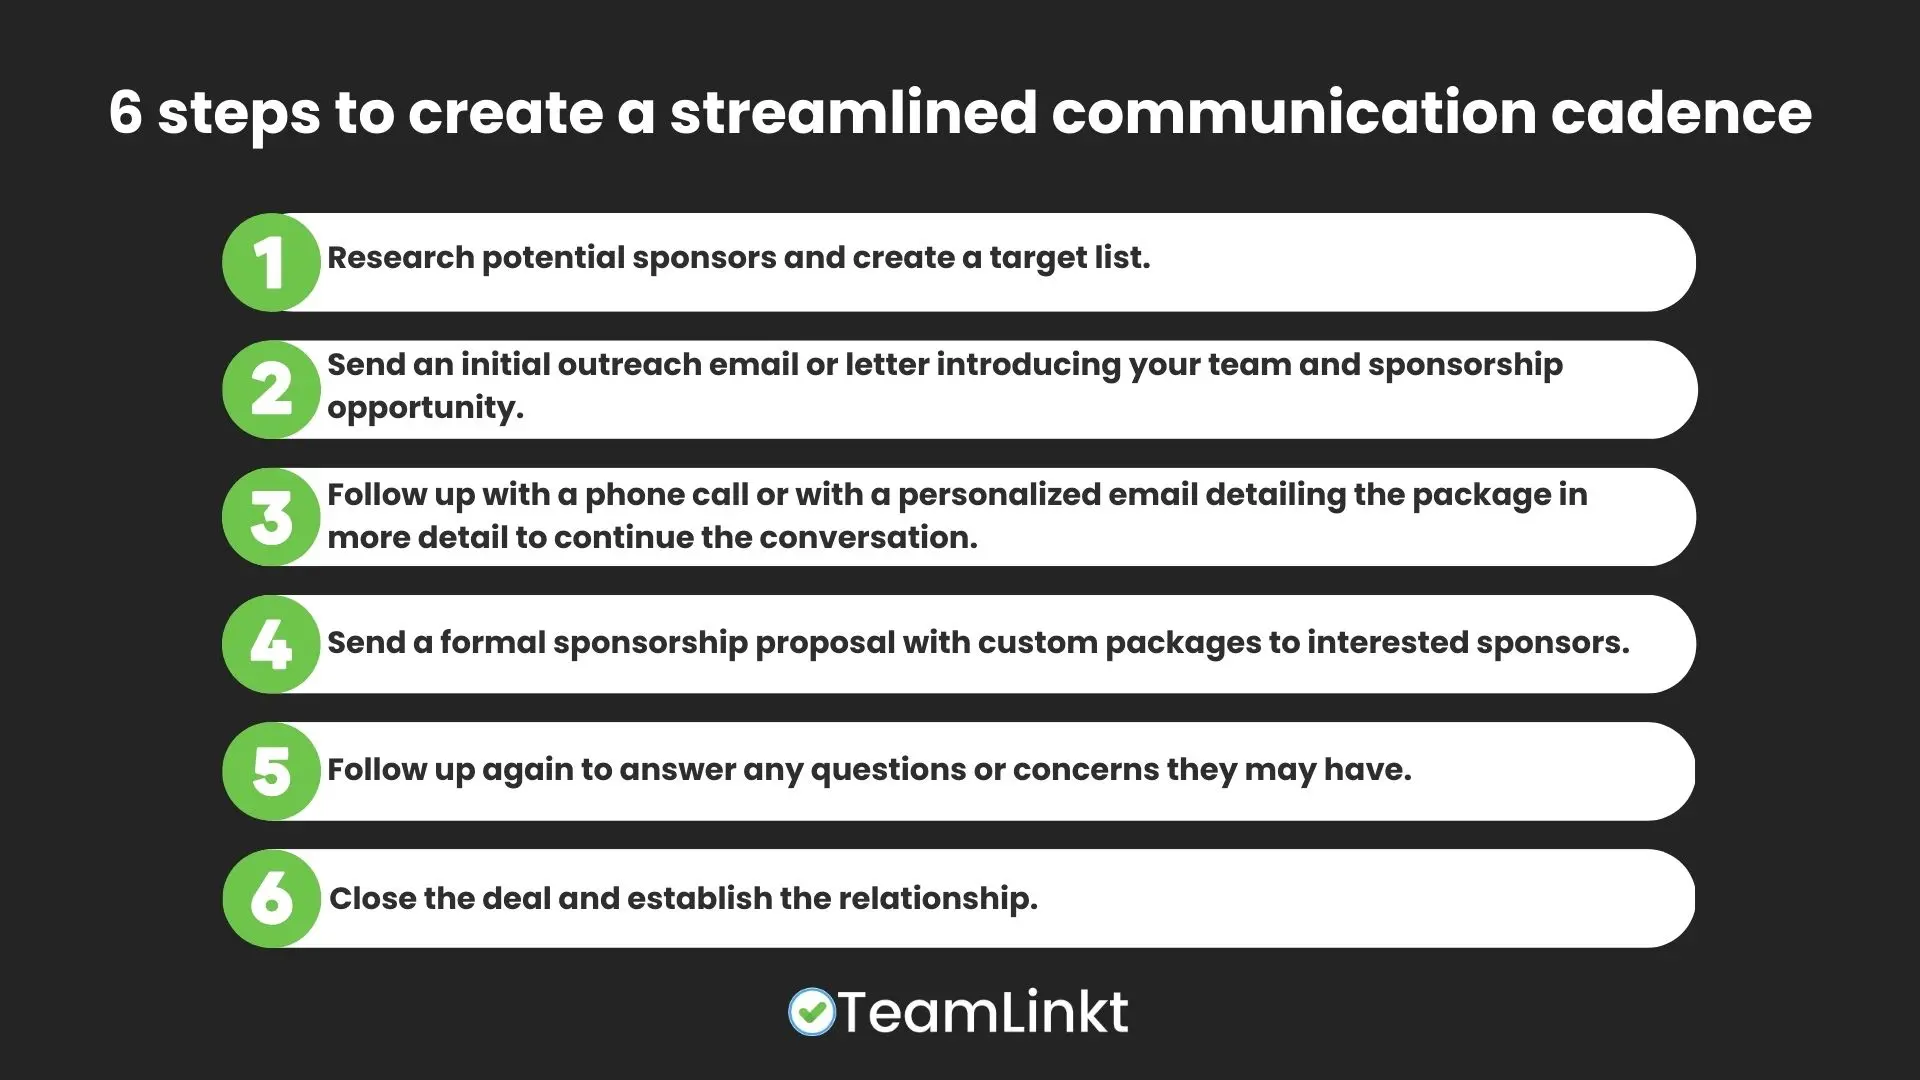 6 steps to create a streamlined communication cadence